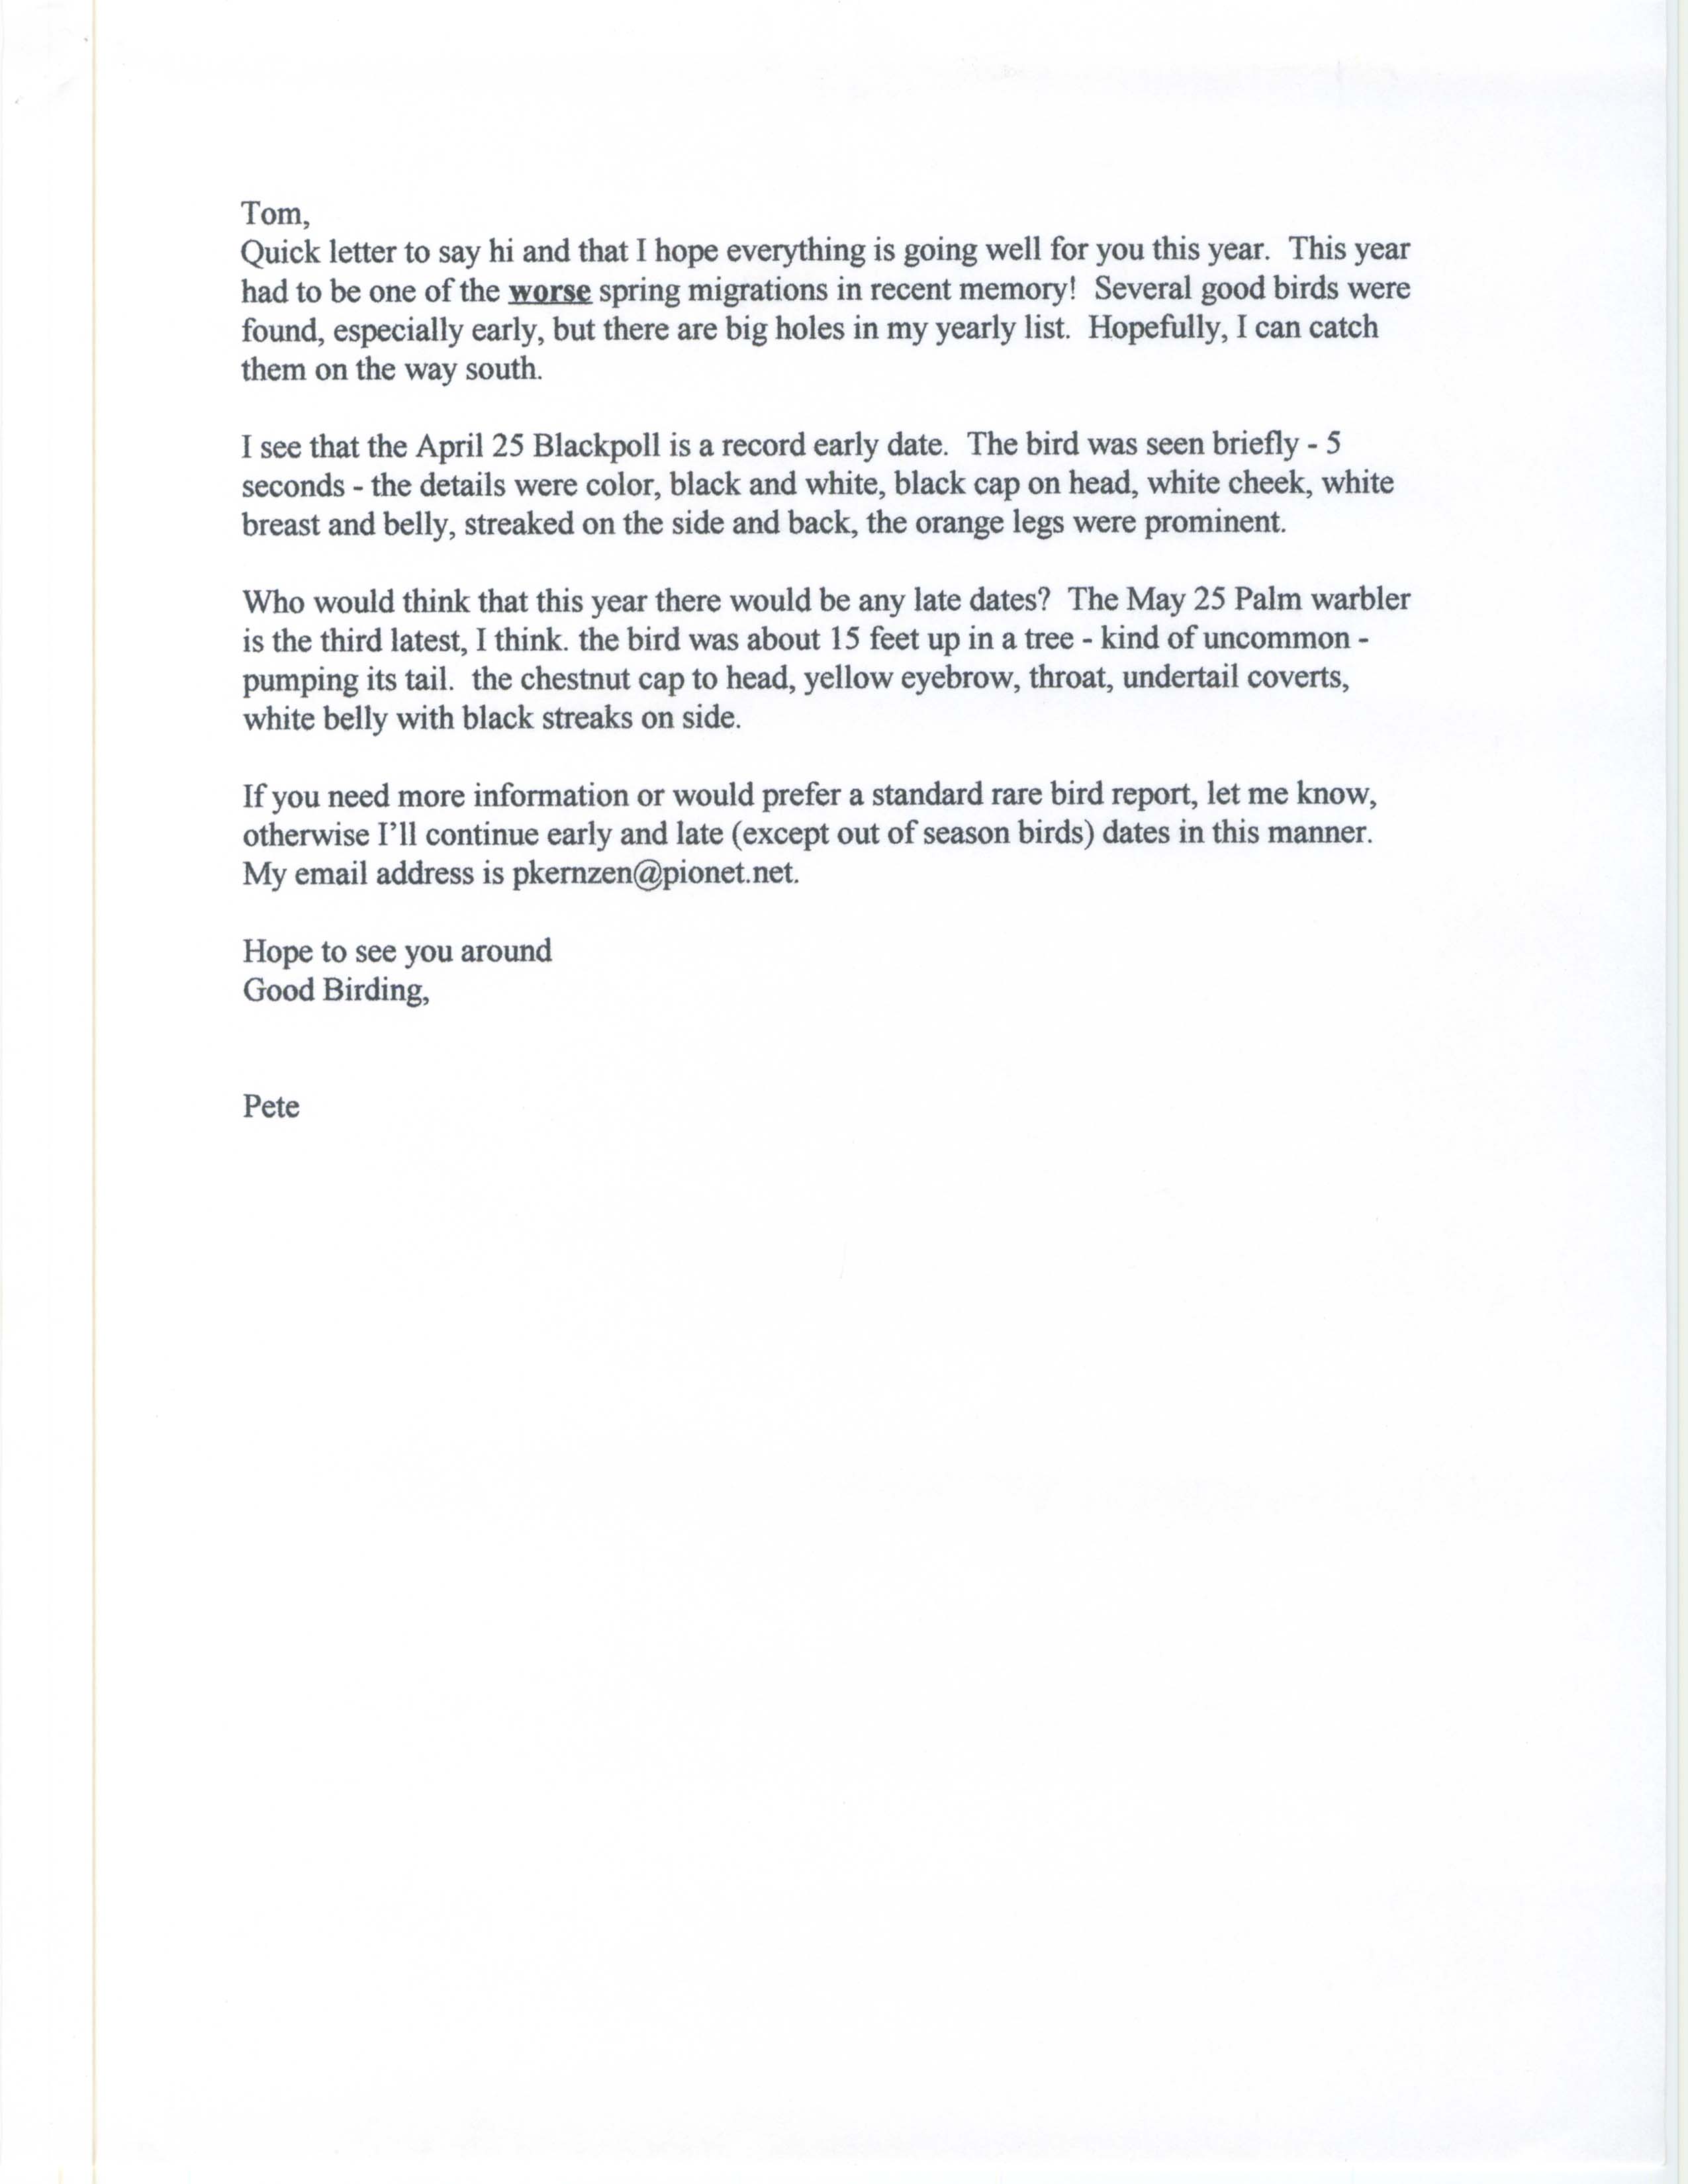 Peter Ernzen letter to Thomas Kent regarding spring migration, spring 1998